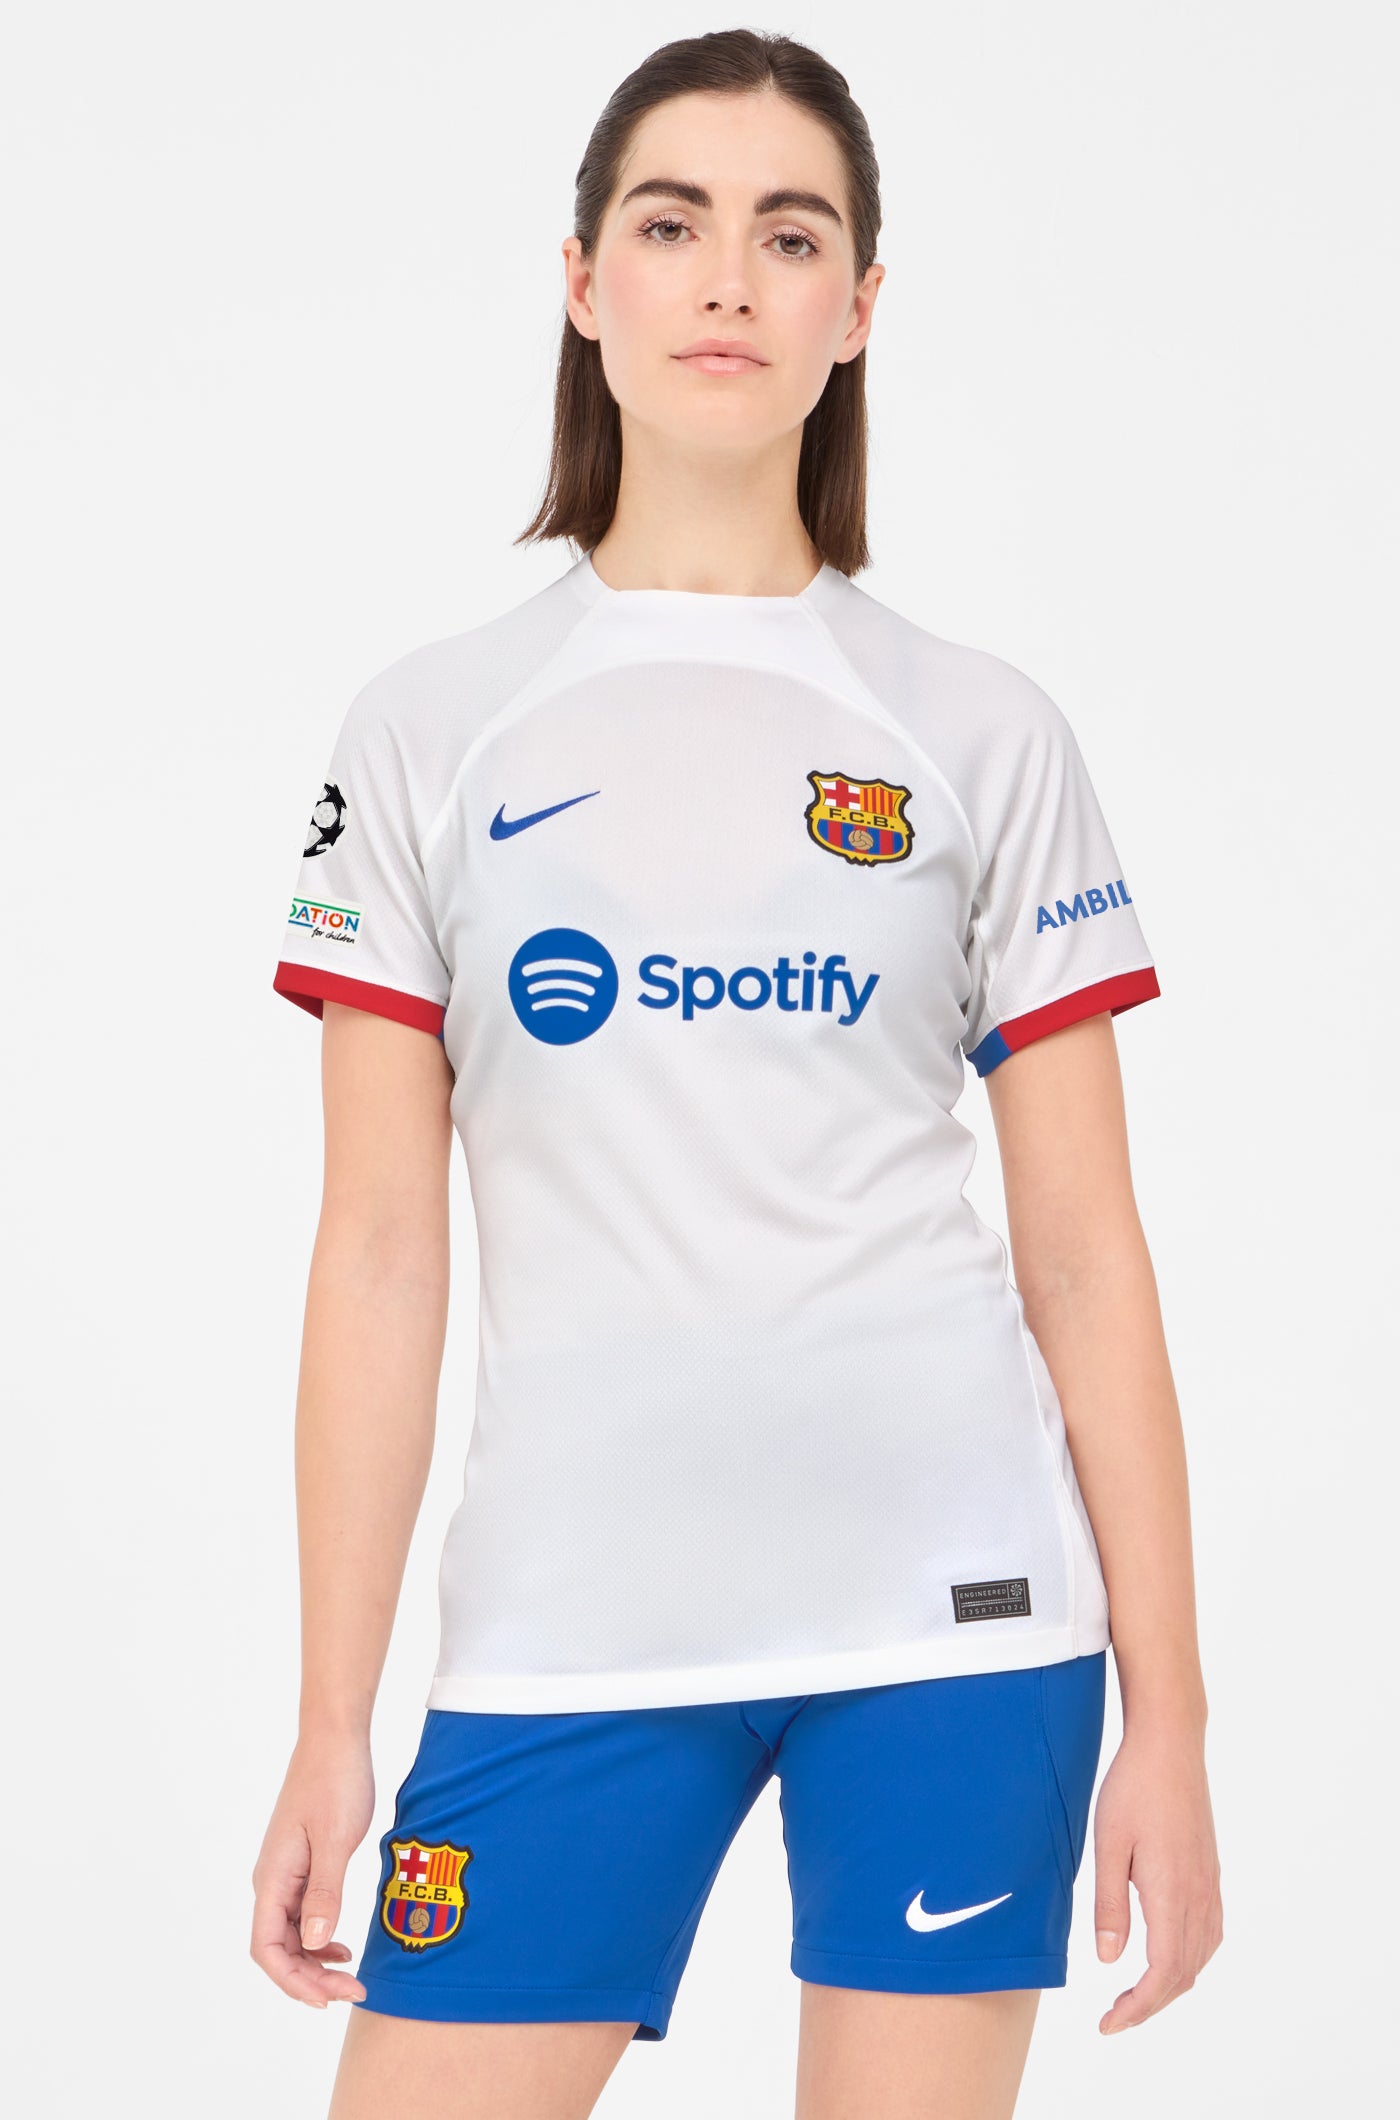 UCL FC Barcelona away shirt 23/24 - Women  - S. ROBERTO